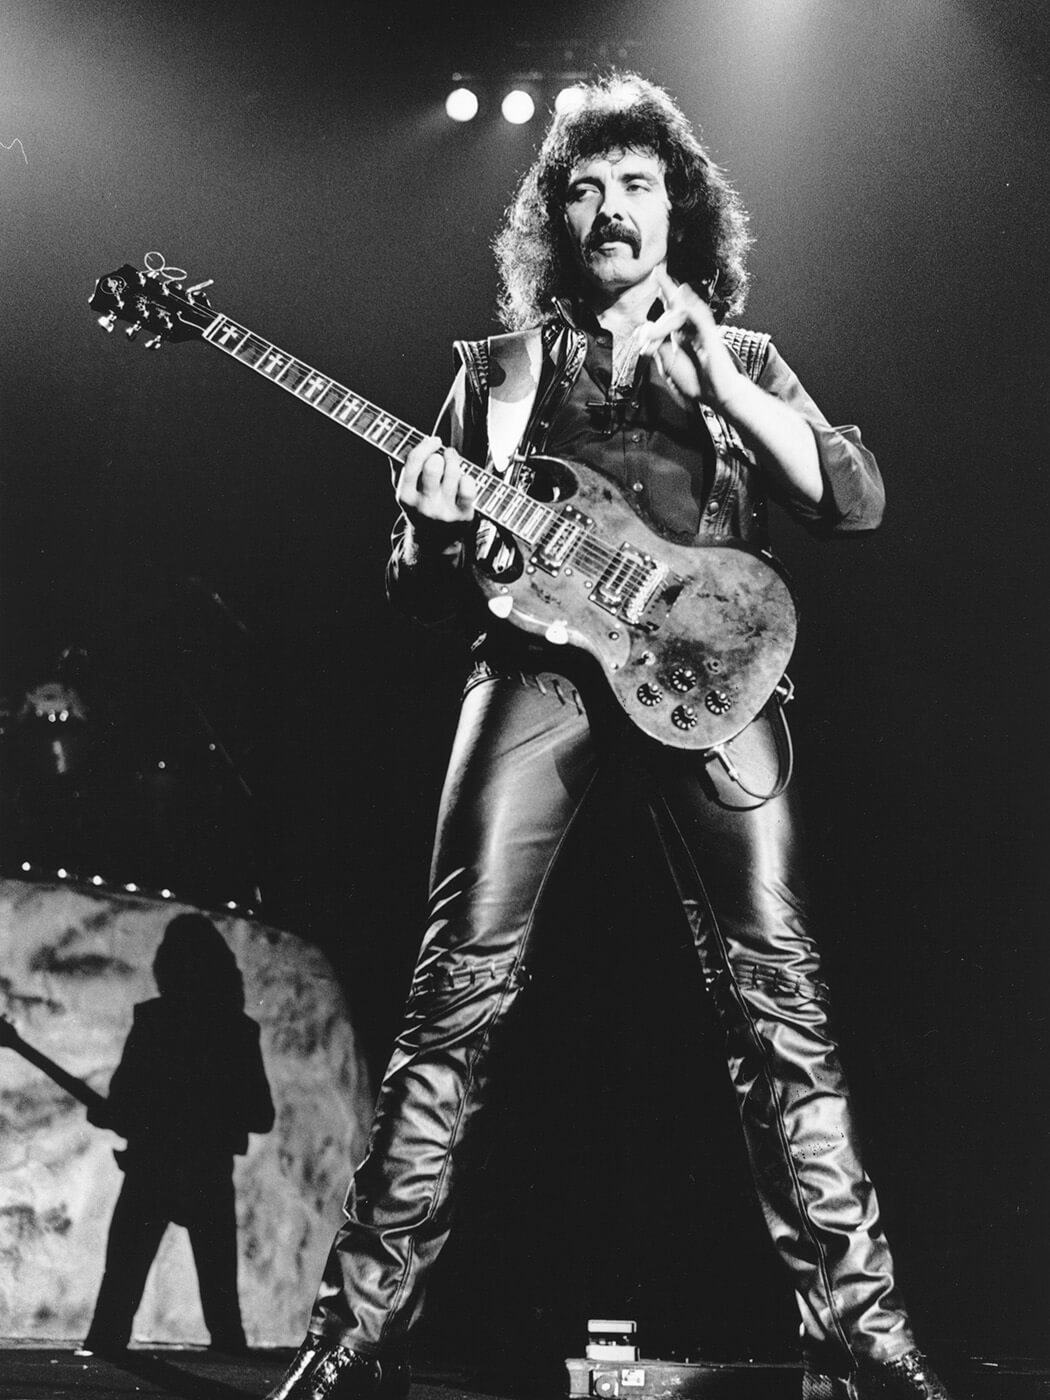 Black Sabbath's Tony Iommi